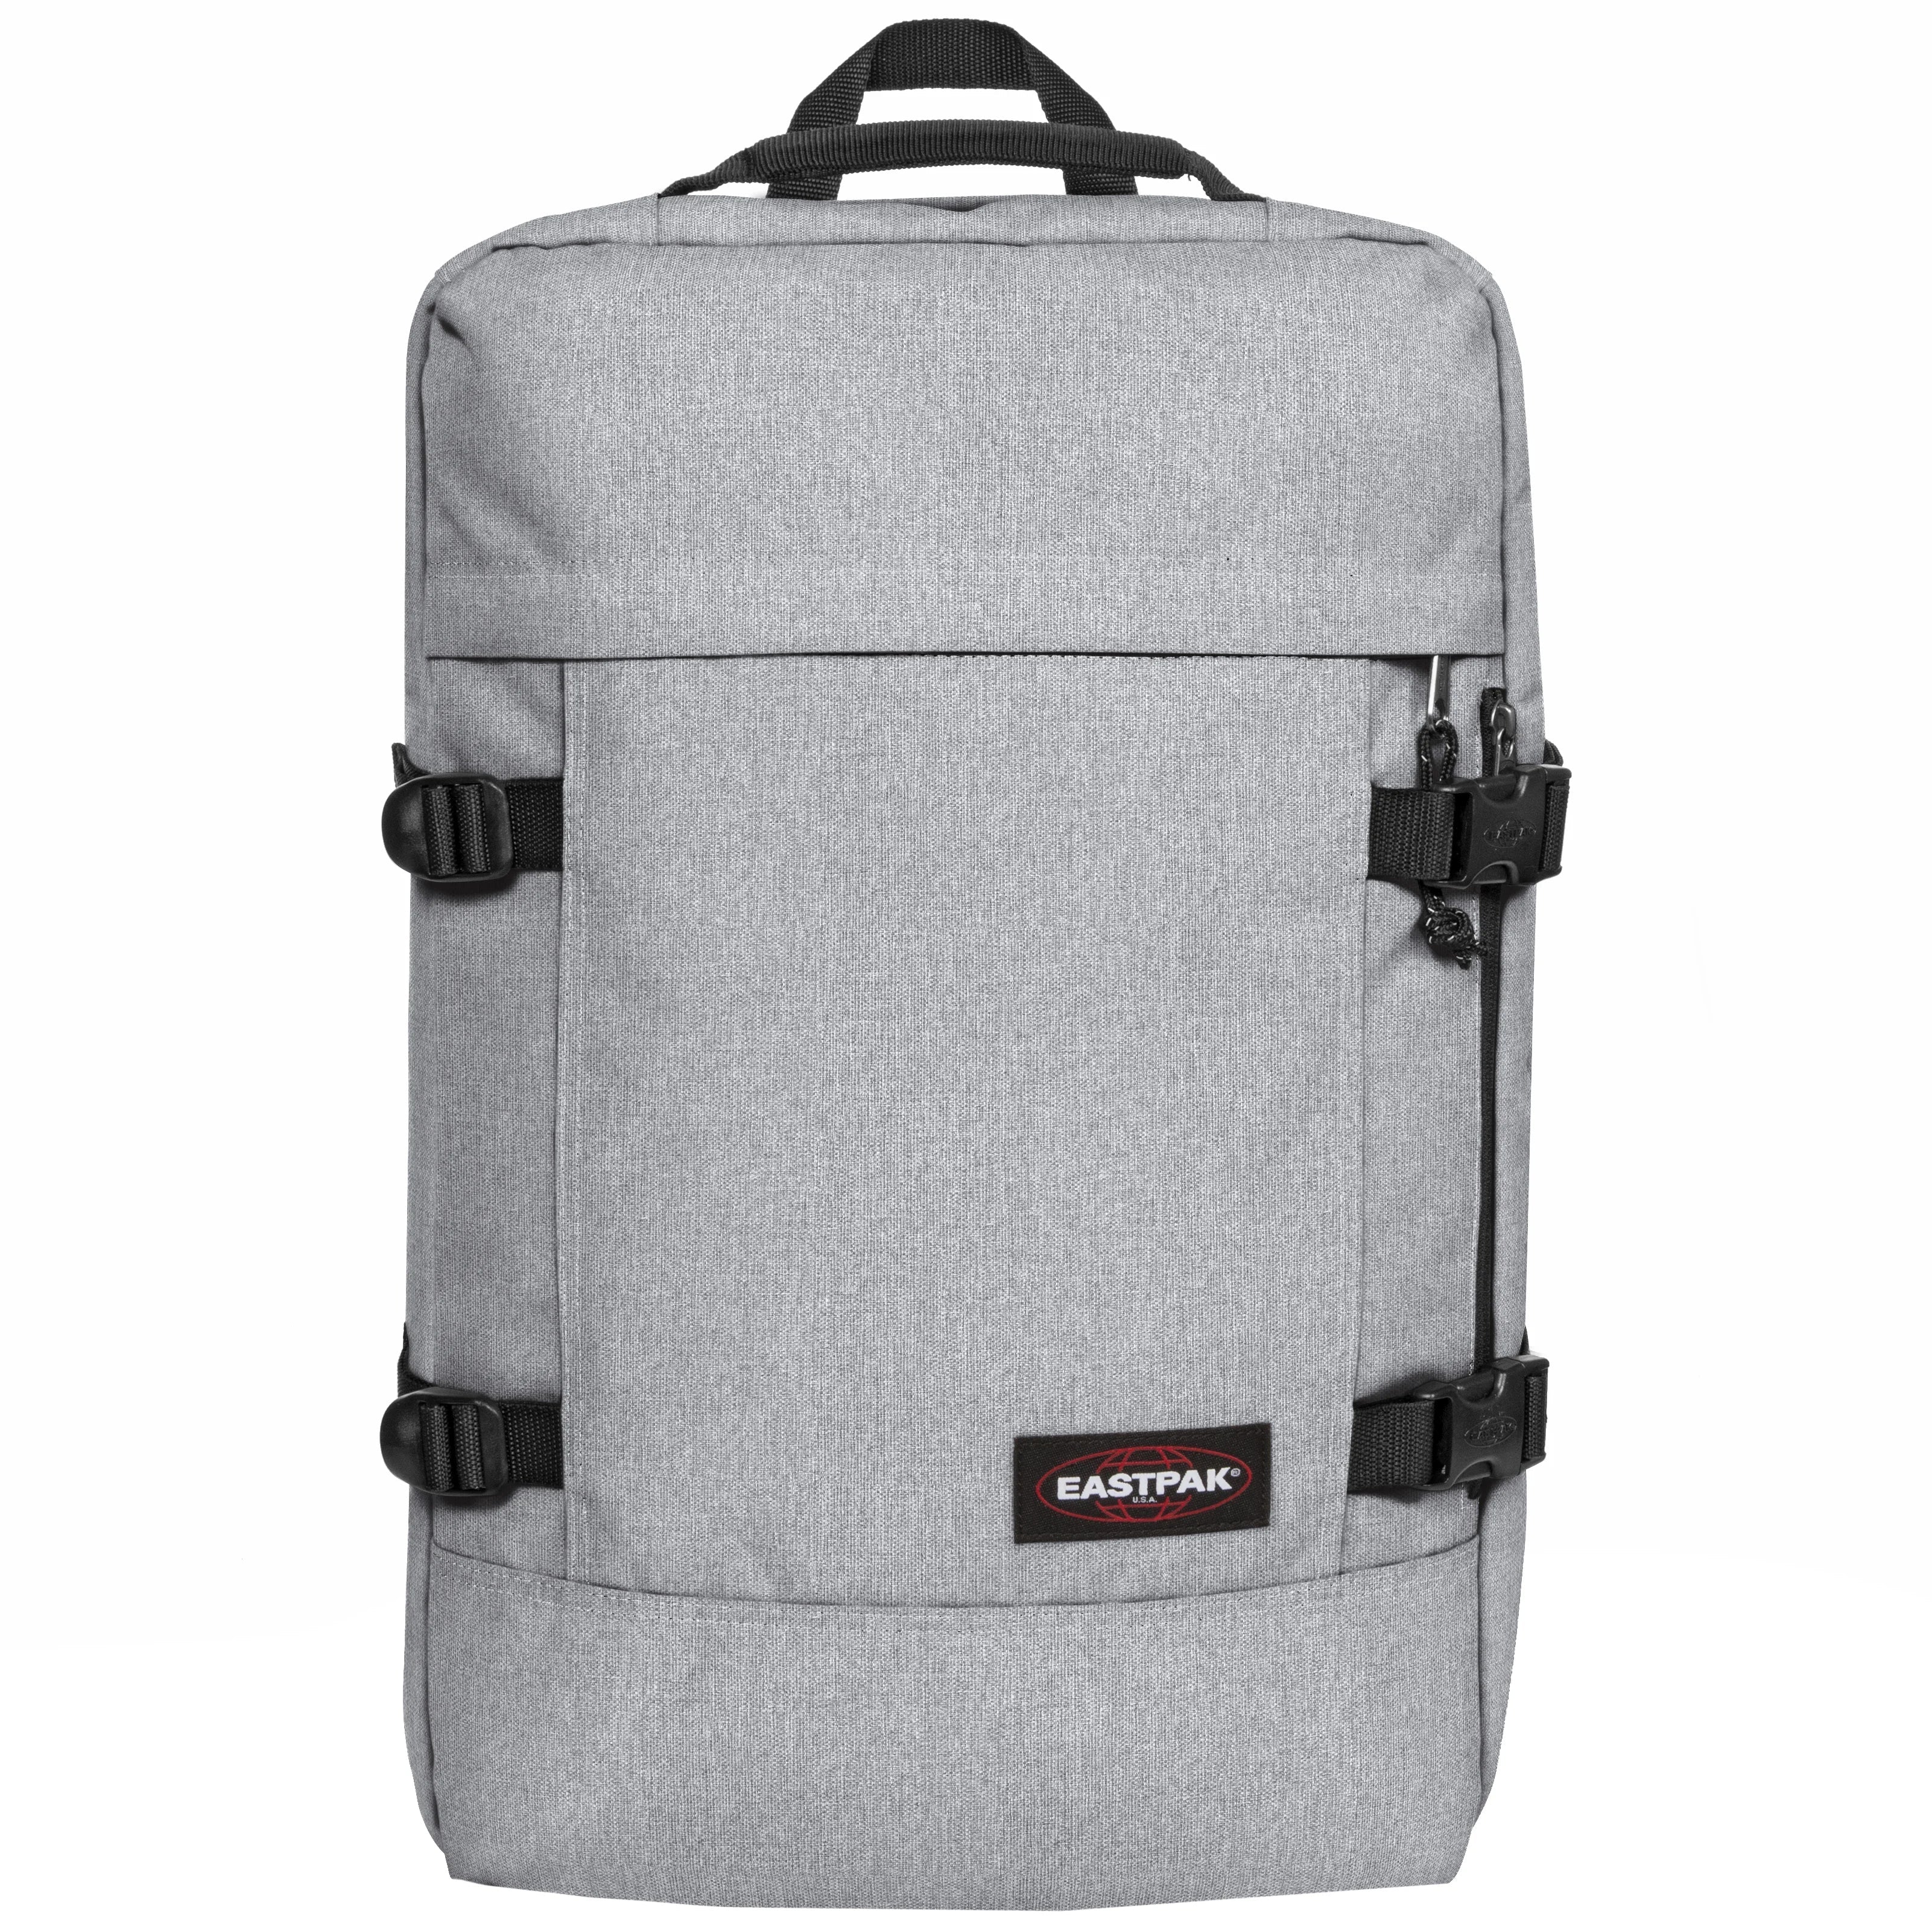 Eastpak Authentic Tranzpack Backpack 51 cm - Sunday Grey